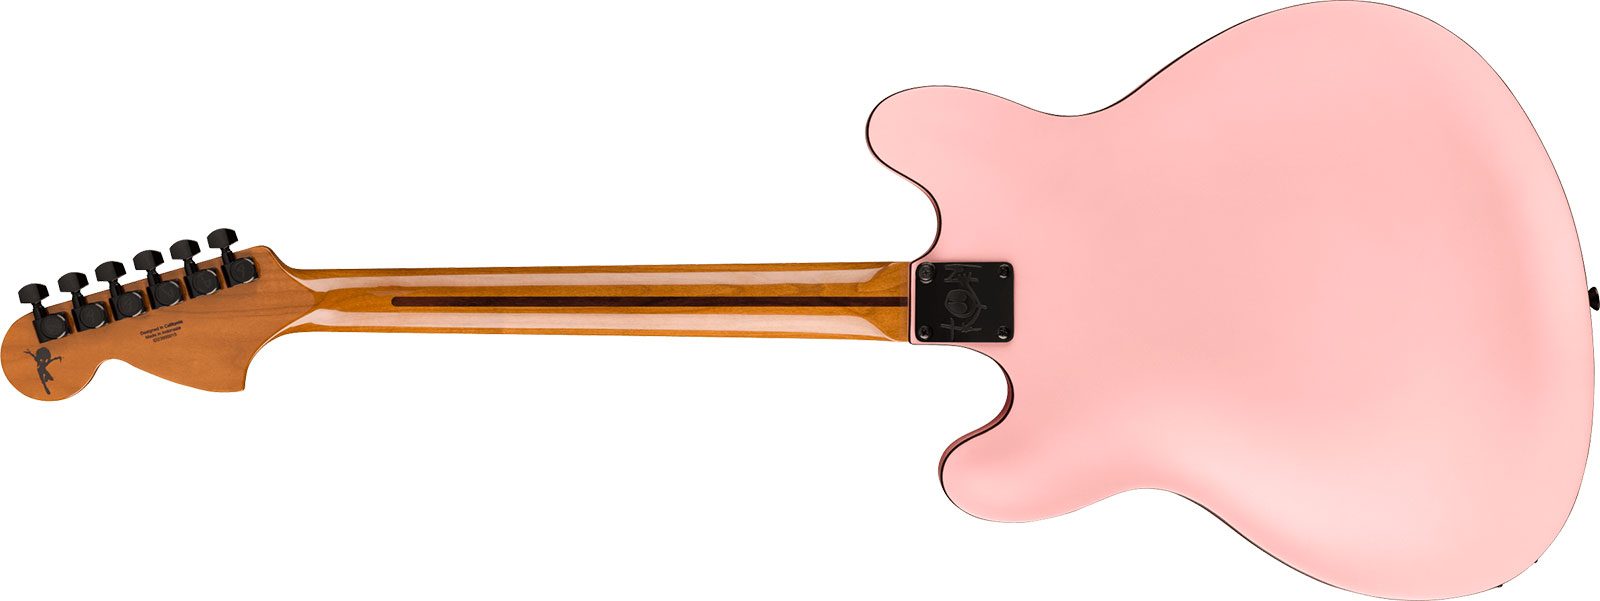 Fender Tom Delonge Starcaster Signature 1h Seymour Duncan Ht Rw - Satin Shell Pink - Semi hollow elektriche gitaar - Variation 1